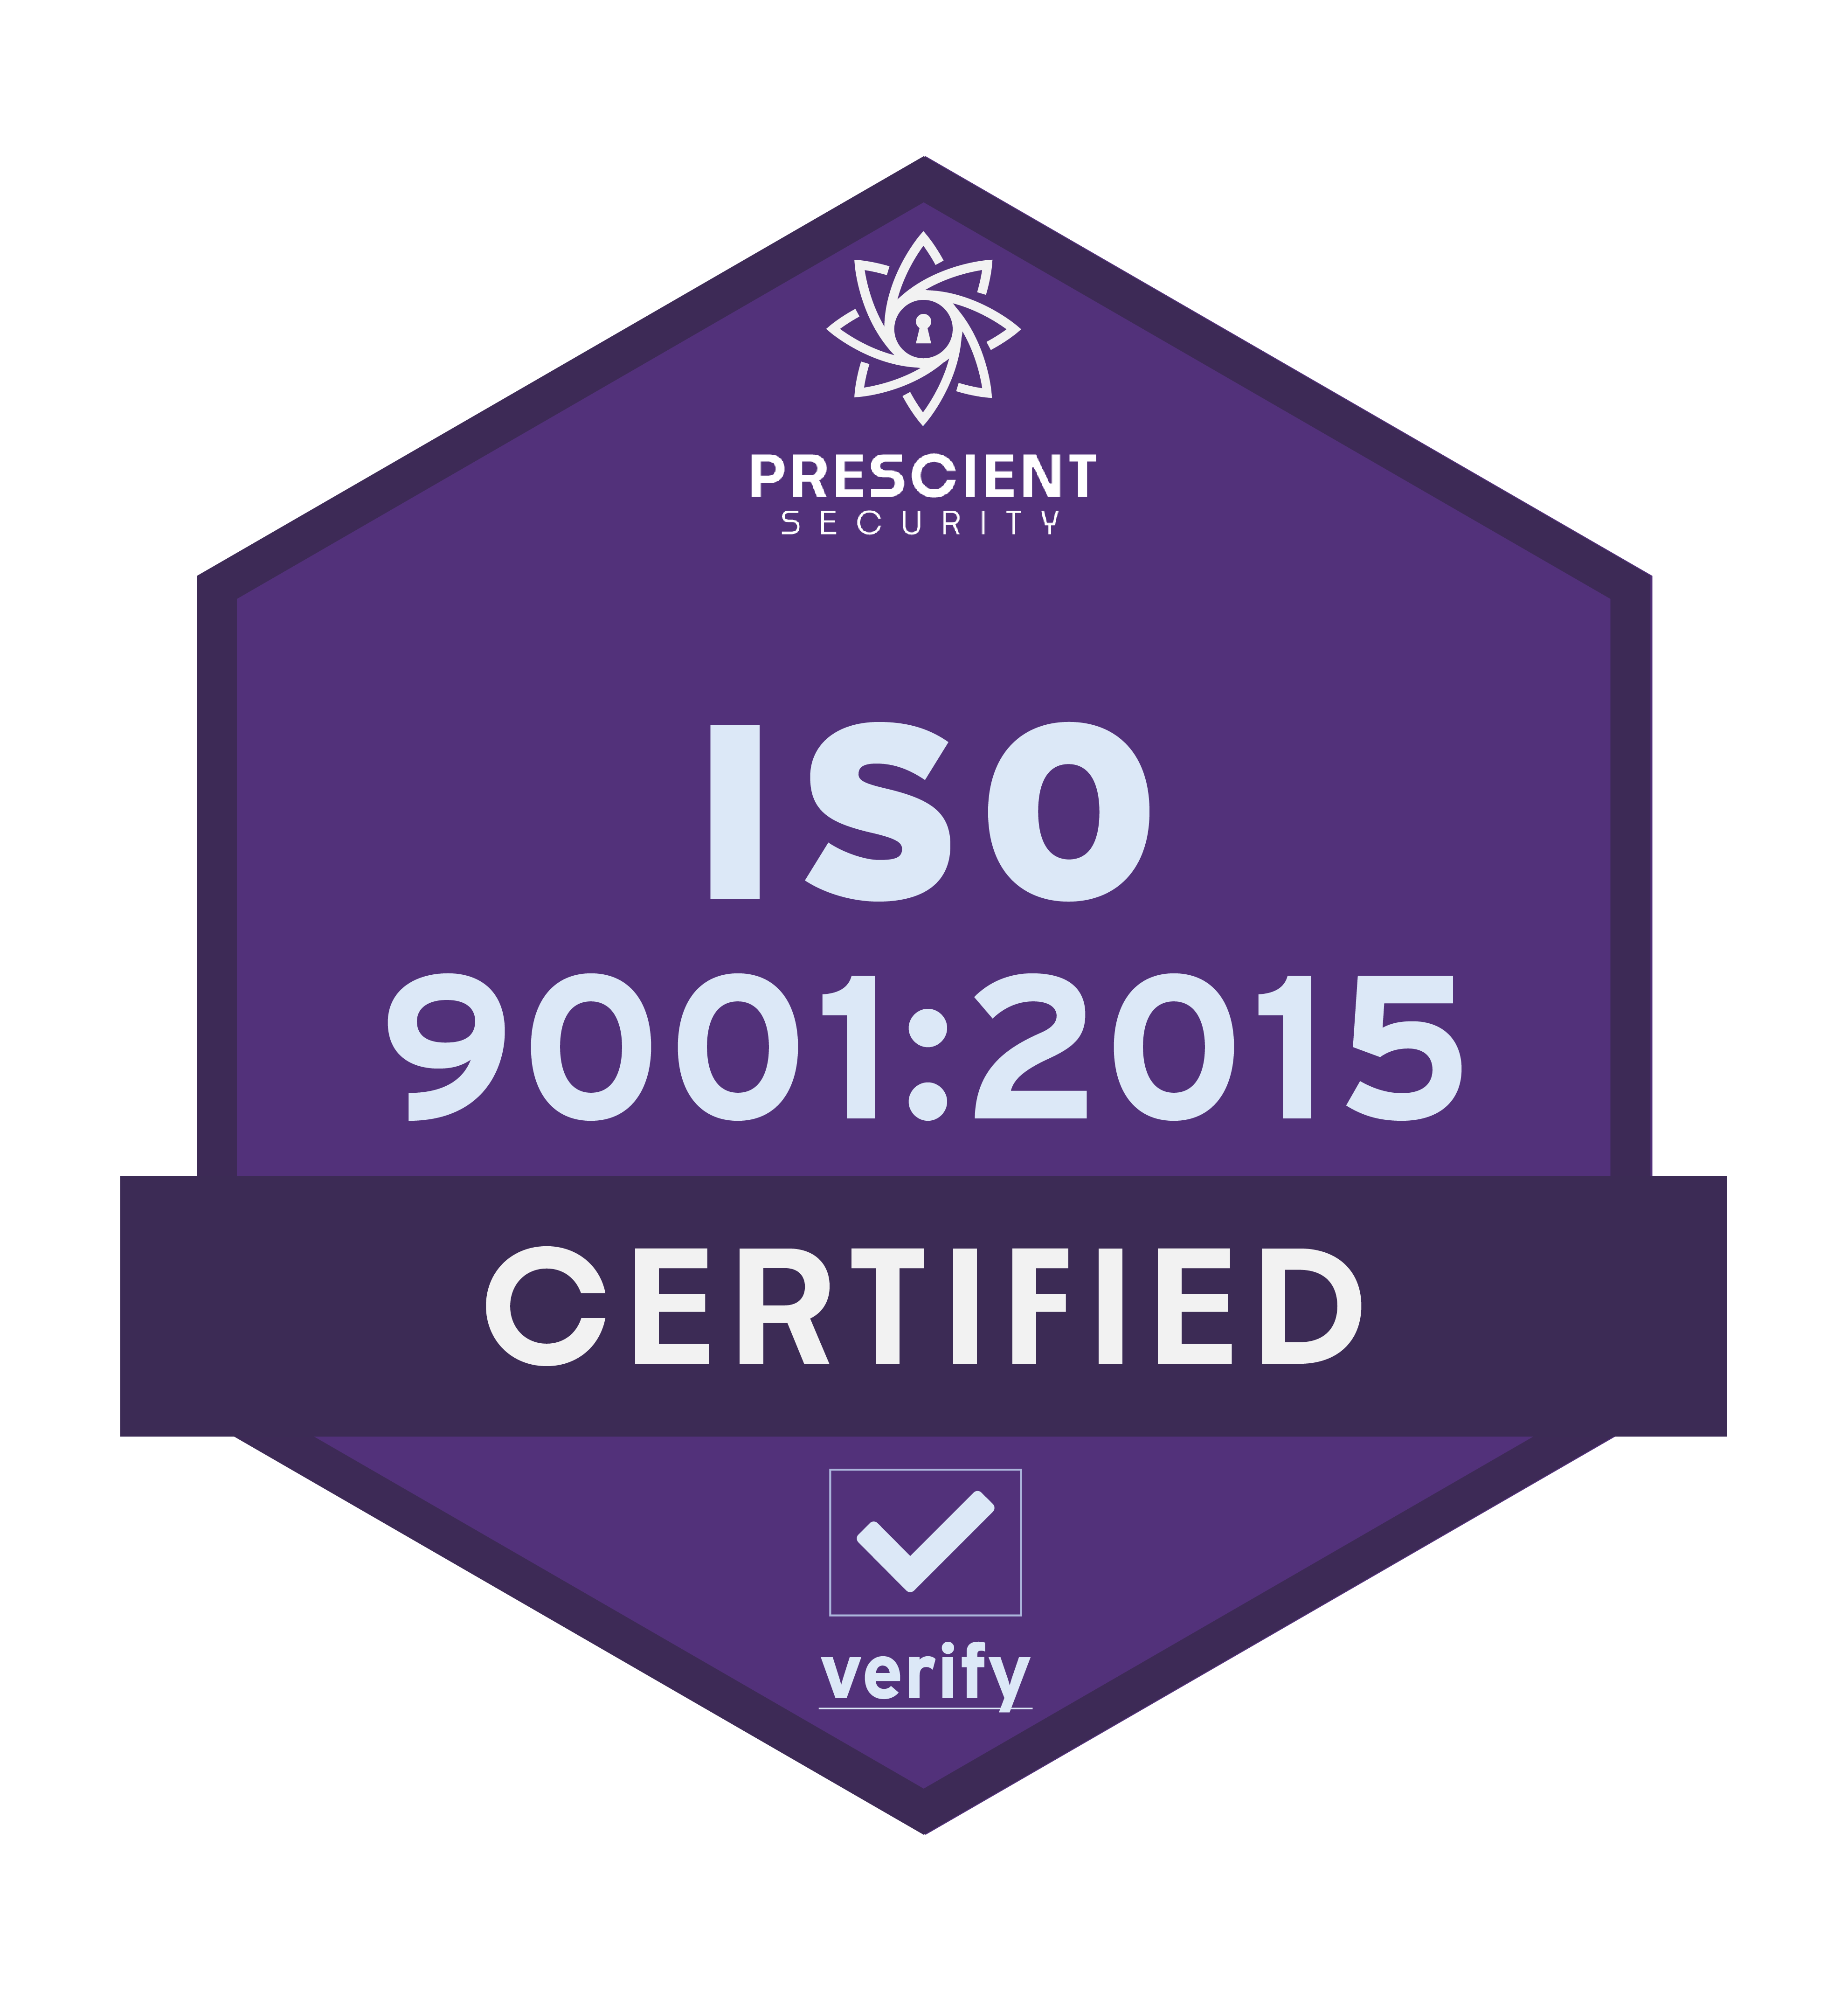 ISO_Marks-9001:2015